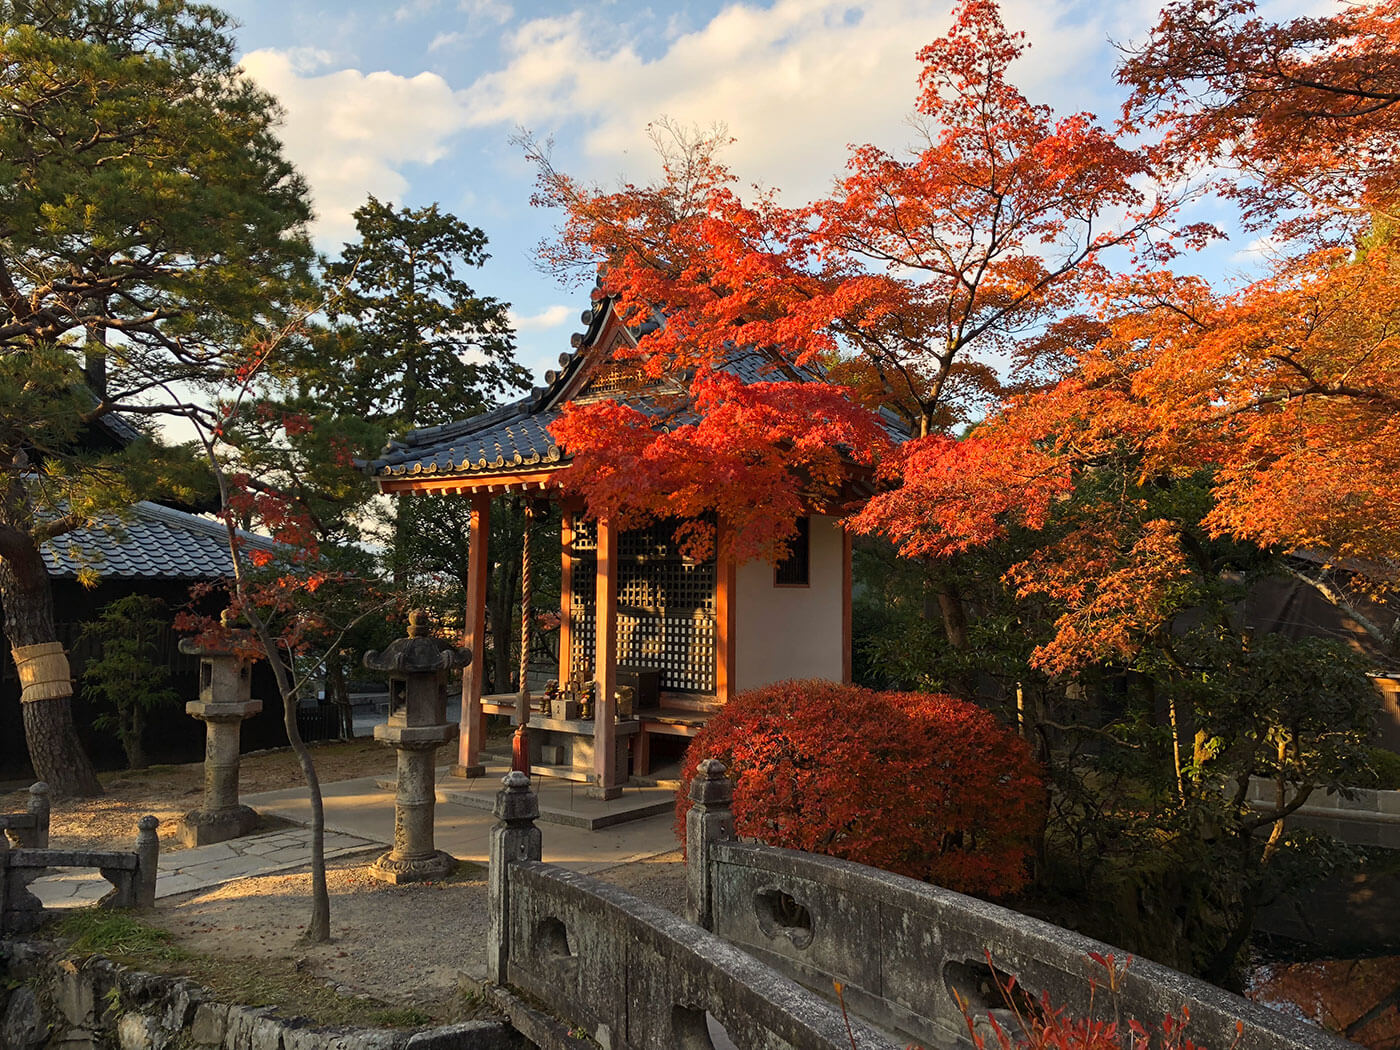 Momiji leaf time at Kiyomizu-dera in Kyoto